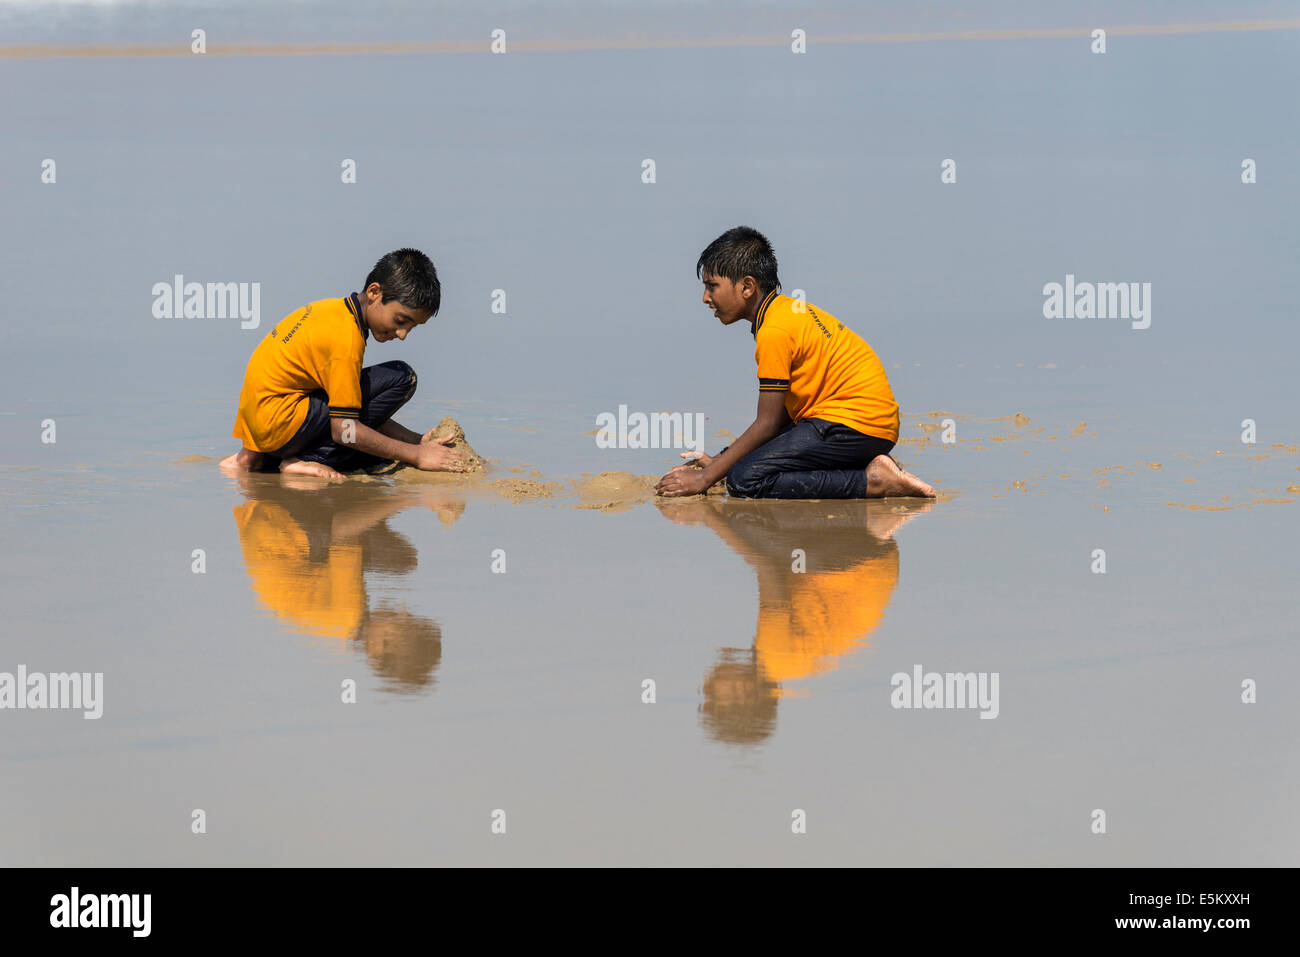 Two schoolboys wearing yellow shirts playing on the beach, reflection, Varkala, Kerala, India Stock Photo